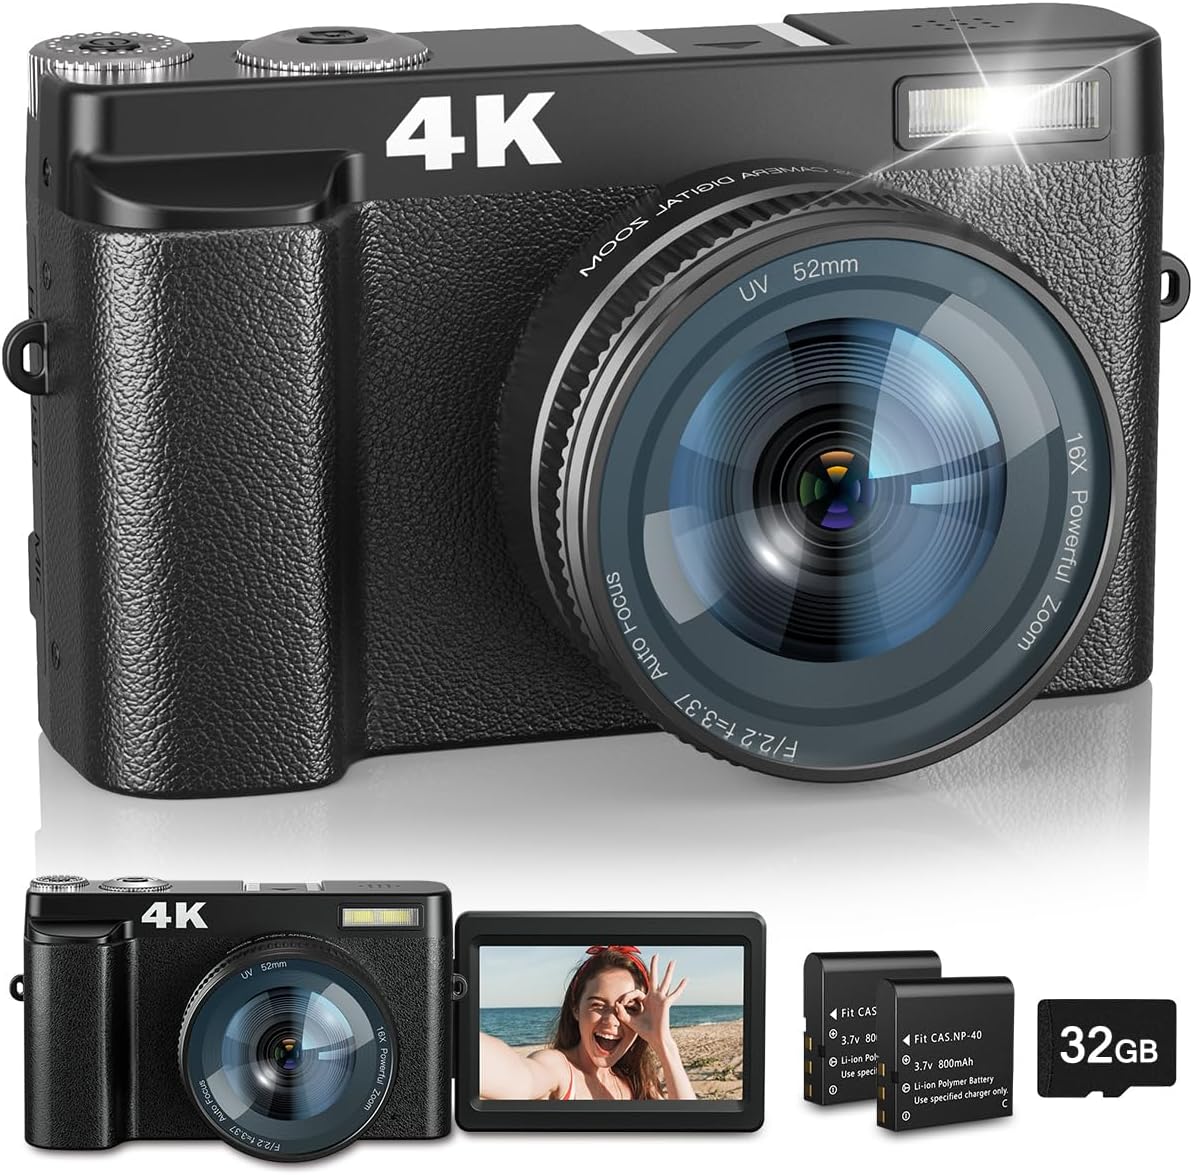 DSOEKEU 4K Digital Camera Review: Capture Stunning Photos and Videos